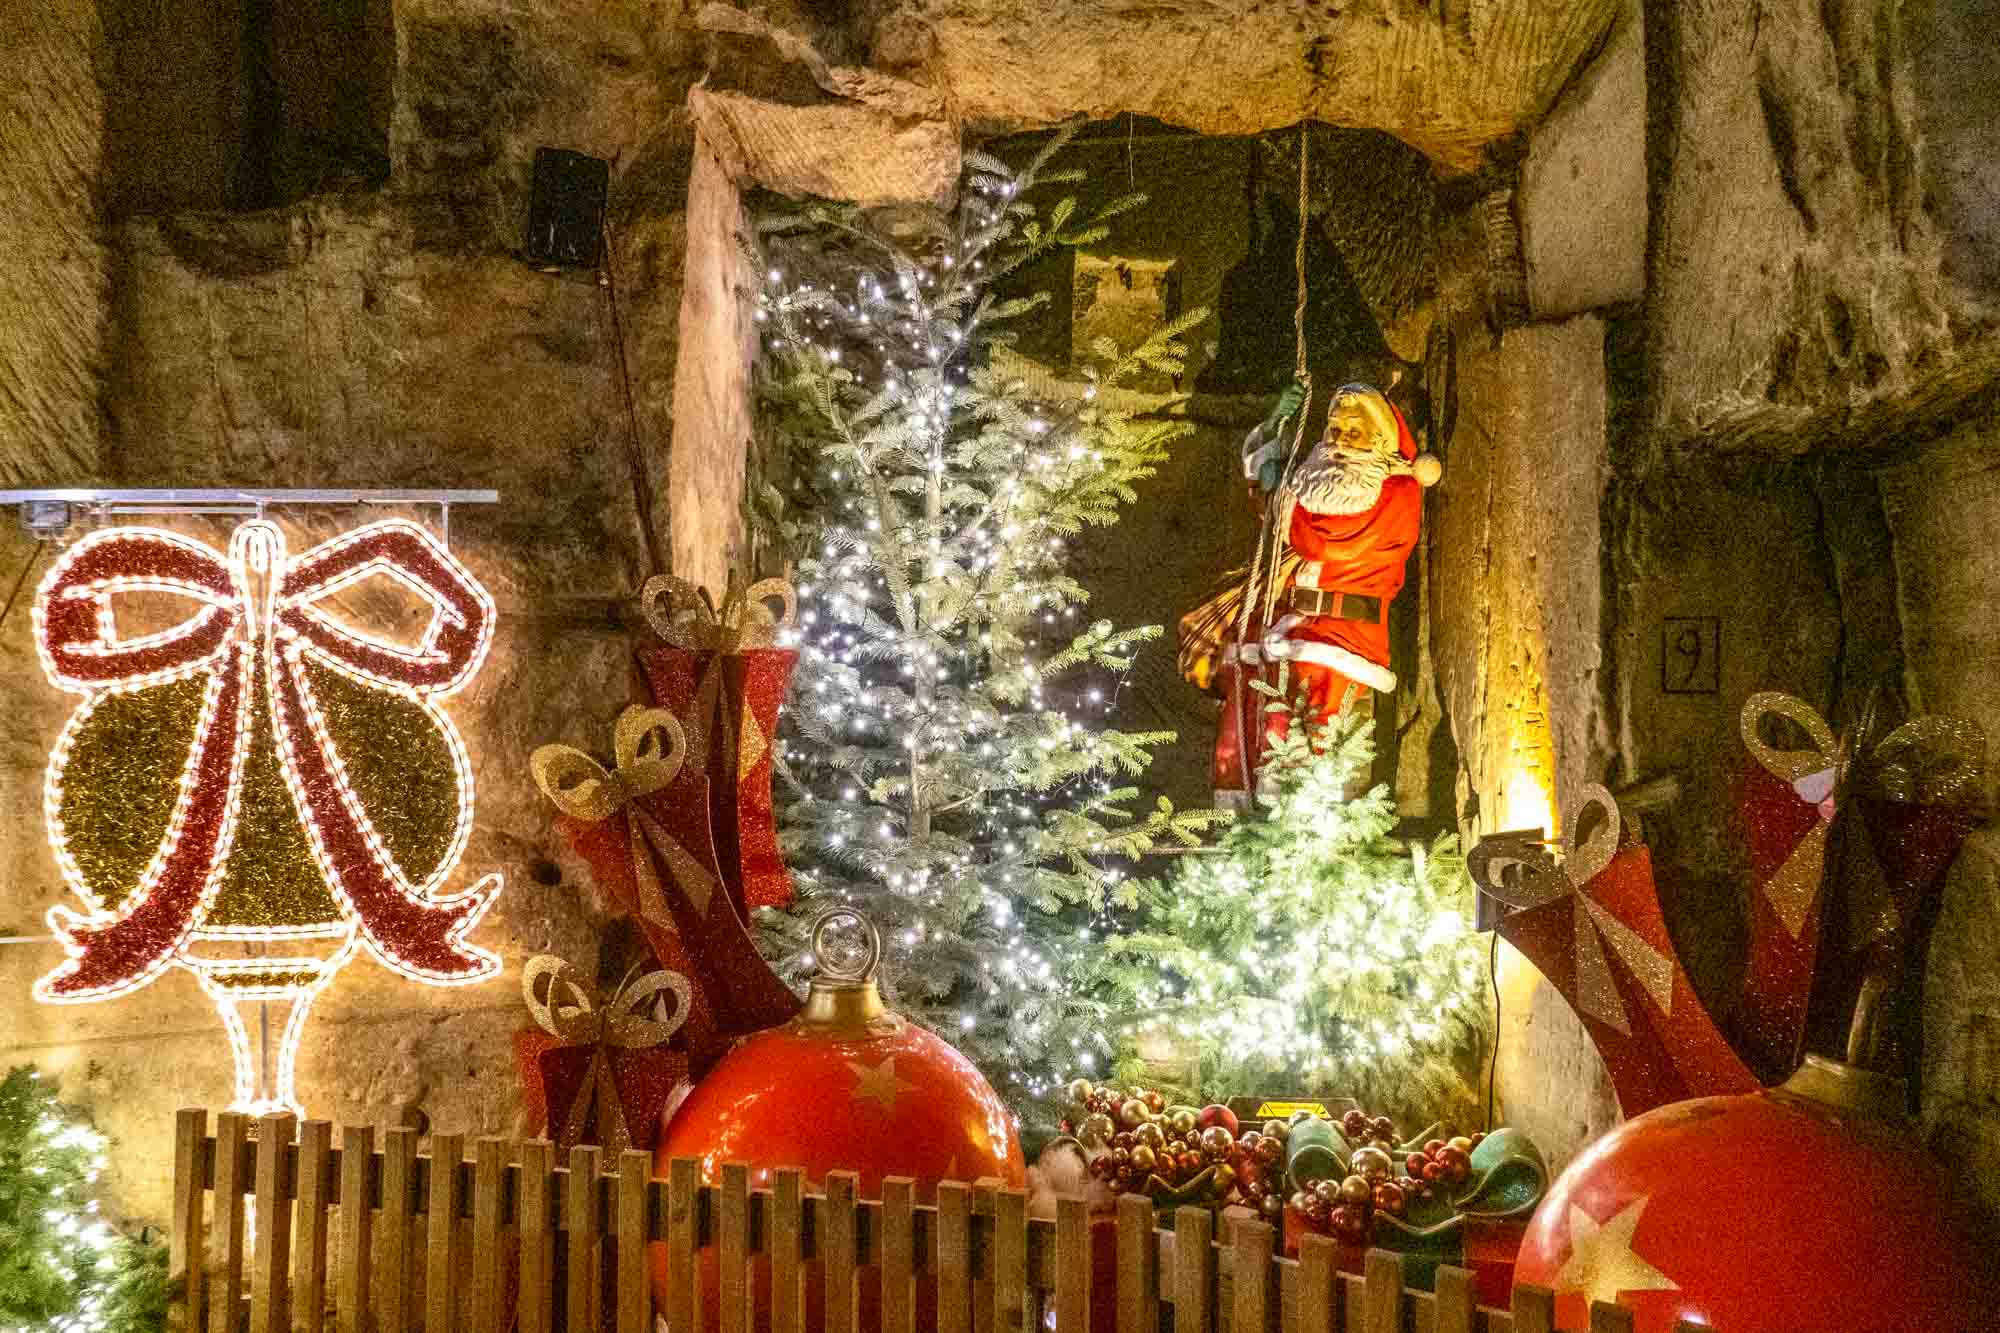 Santa, large ornaments, and Christmas light display.